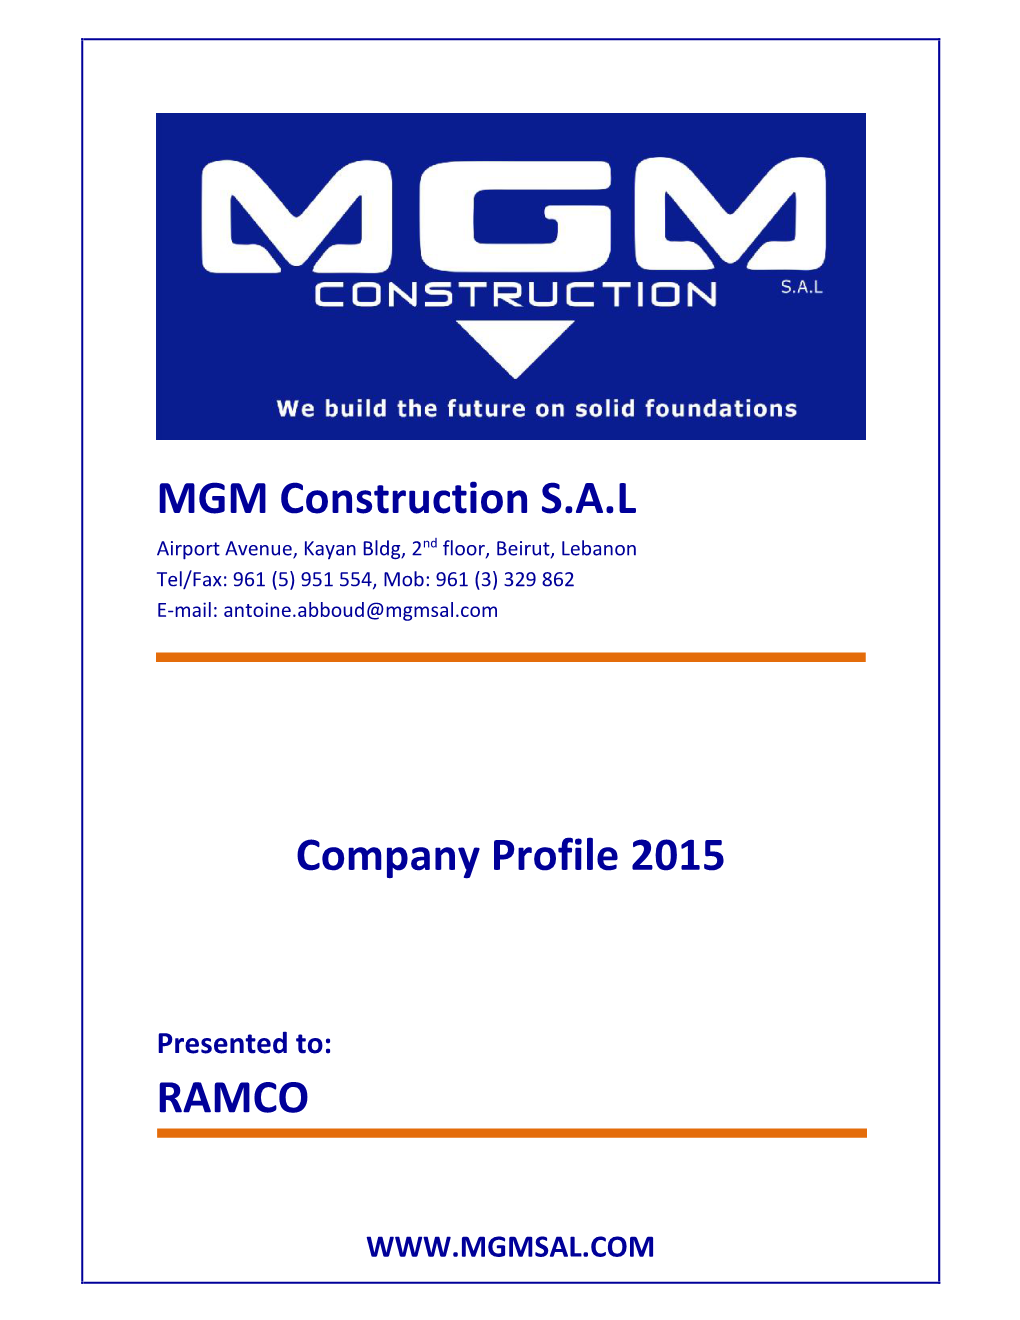 MGM Construction S.A.L Company Profile 2015 RAMCO